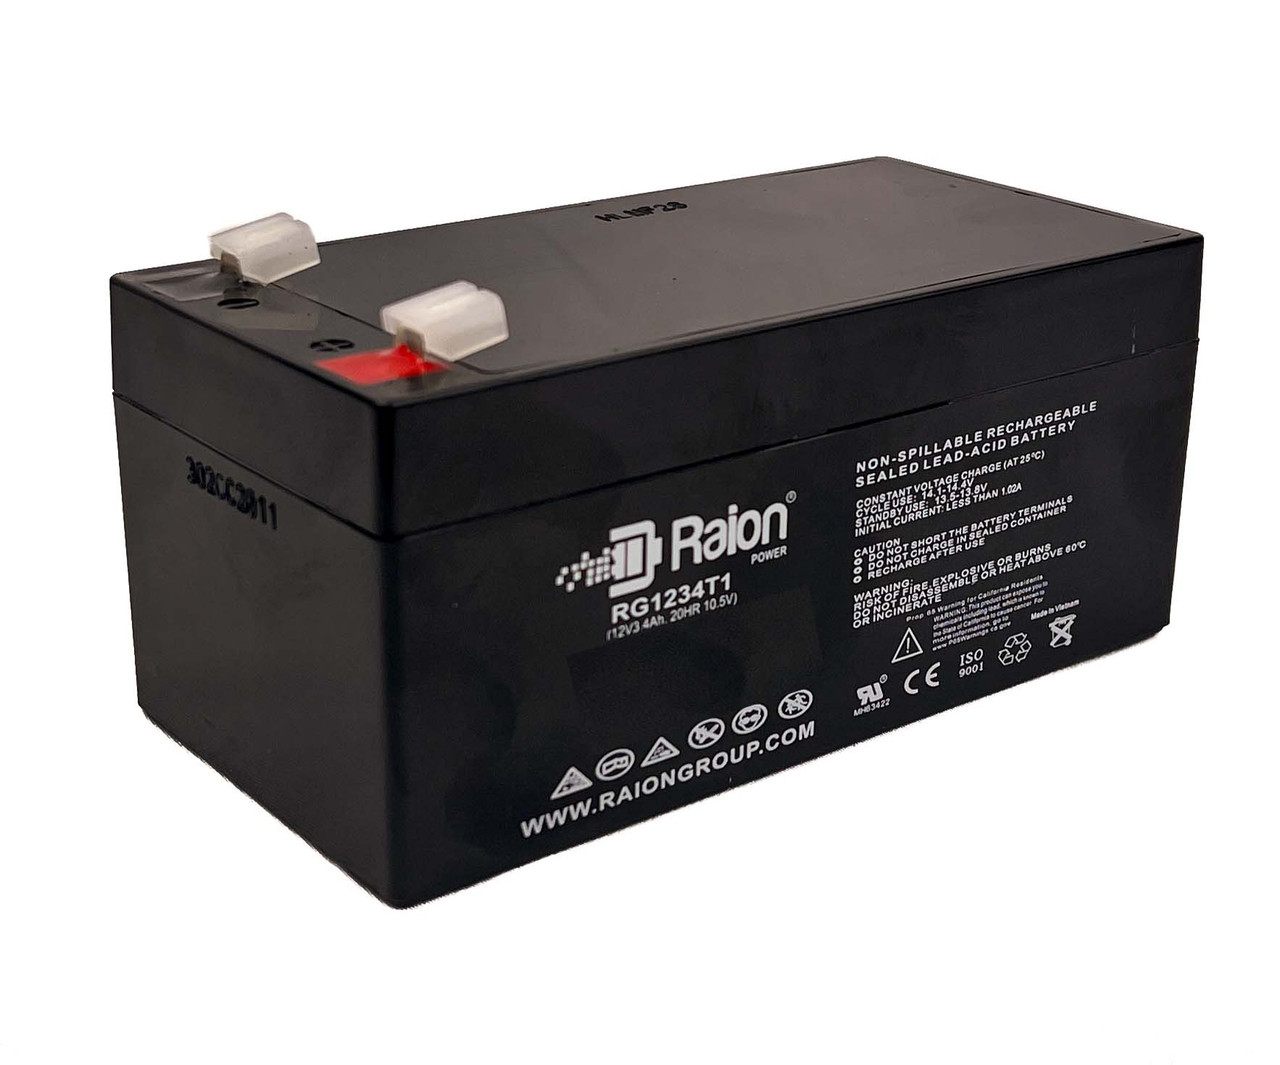 Raion Power 12V 3.4Ah Non-Spillable Replacement Battery for CBB NP3.3-12